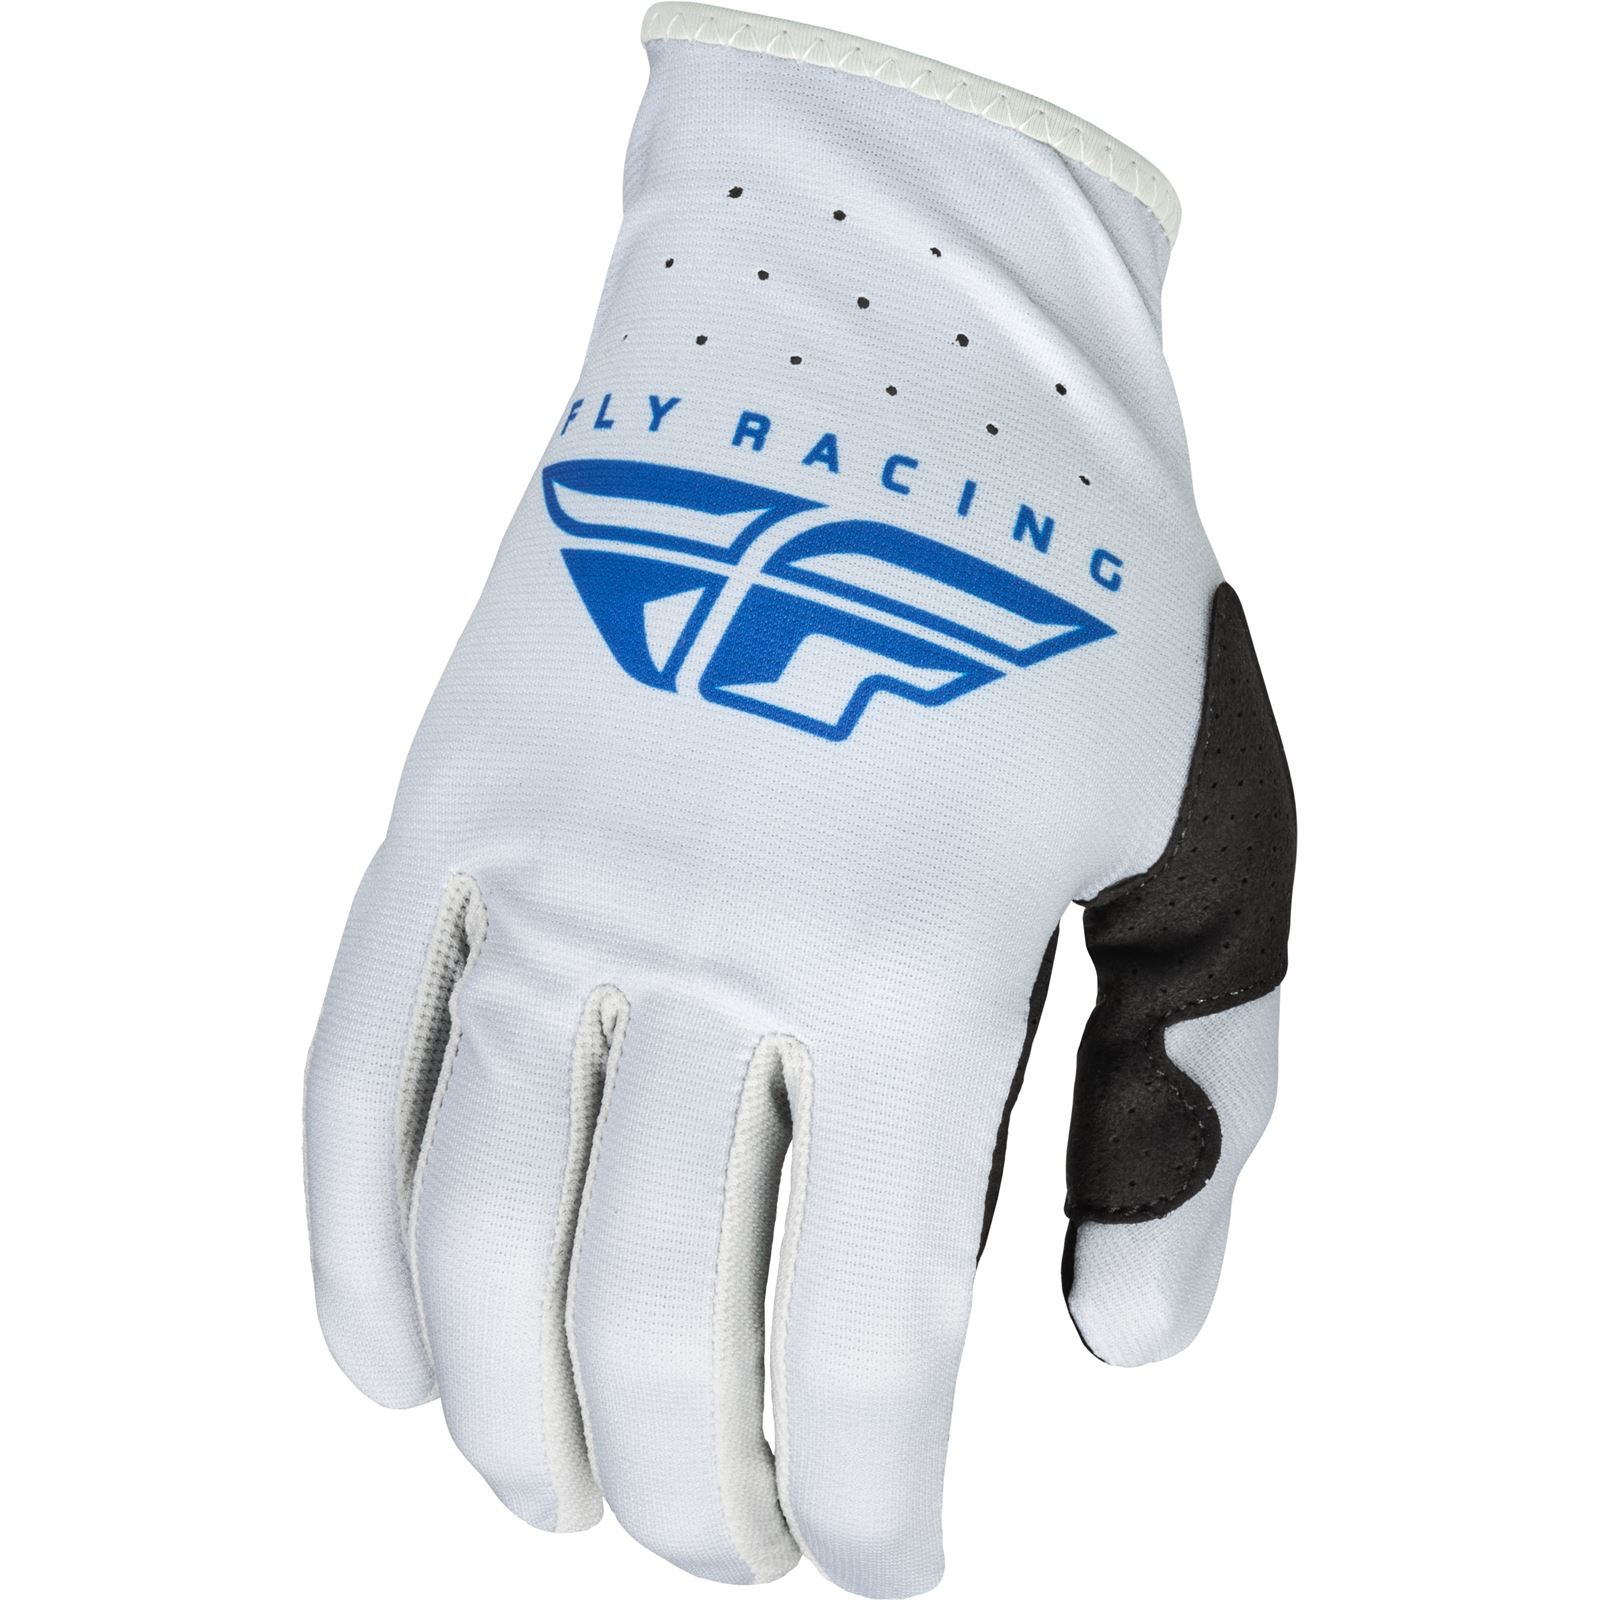 Fly Racing Lite Gloves - Grey/Blue - 2XL